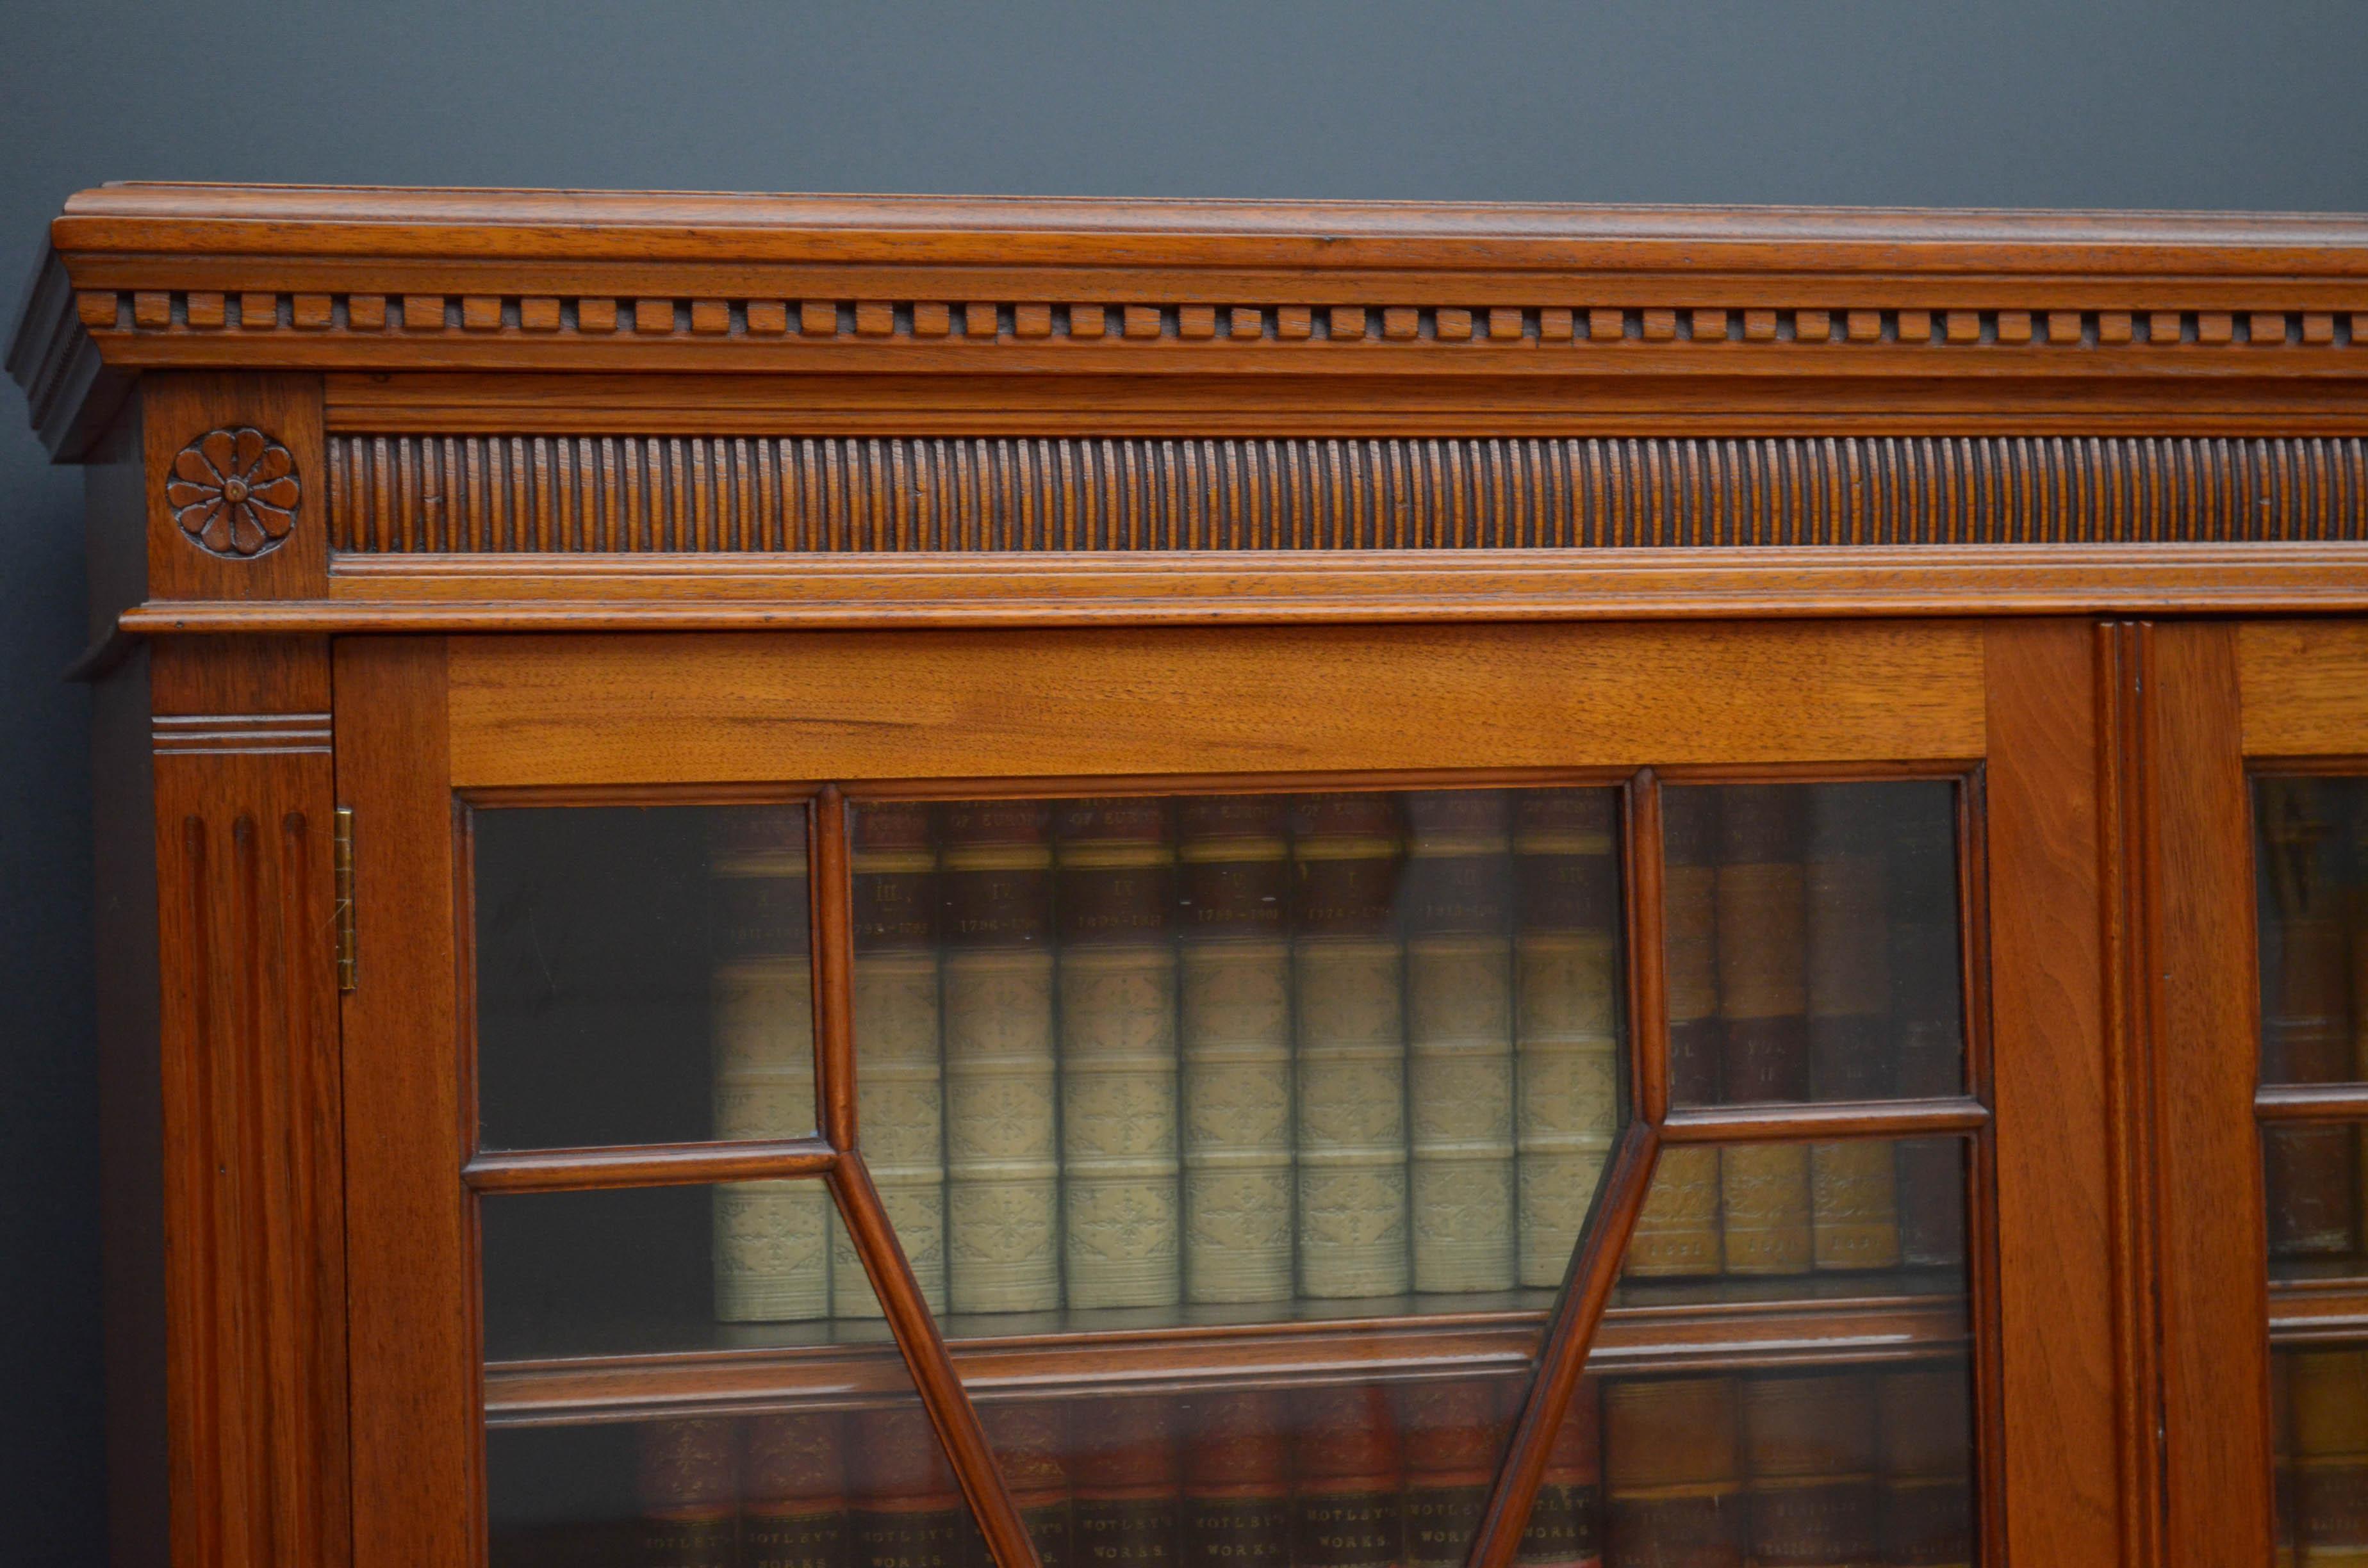 Late Victorian Glazed Bookcase in Walnut 3